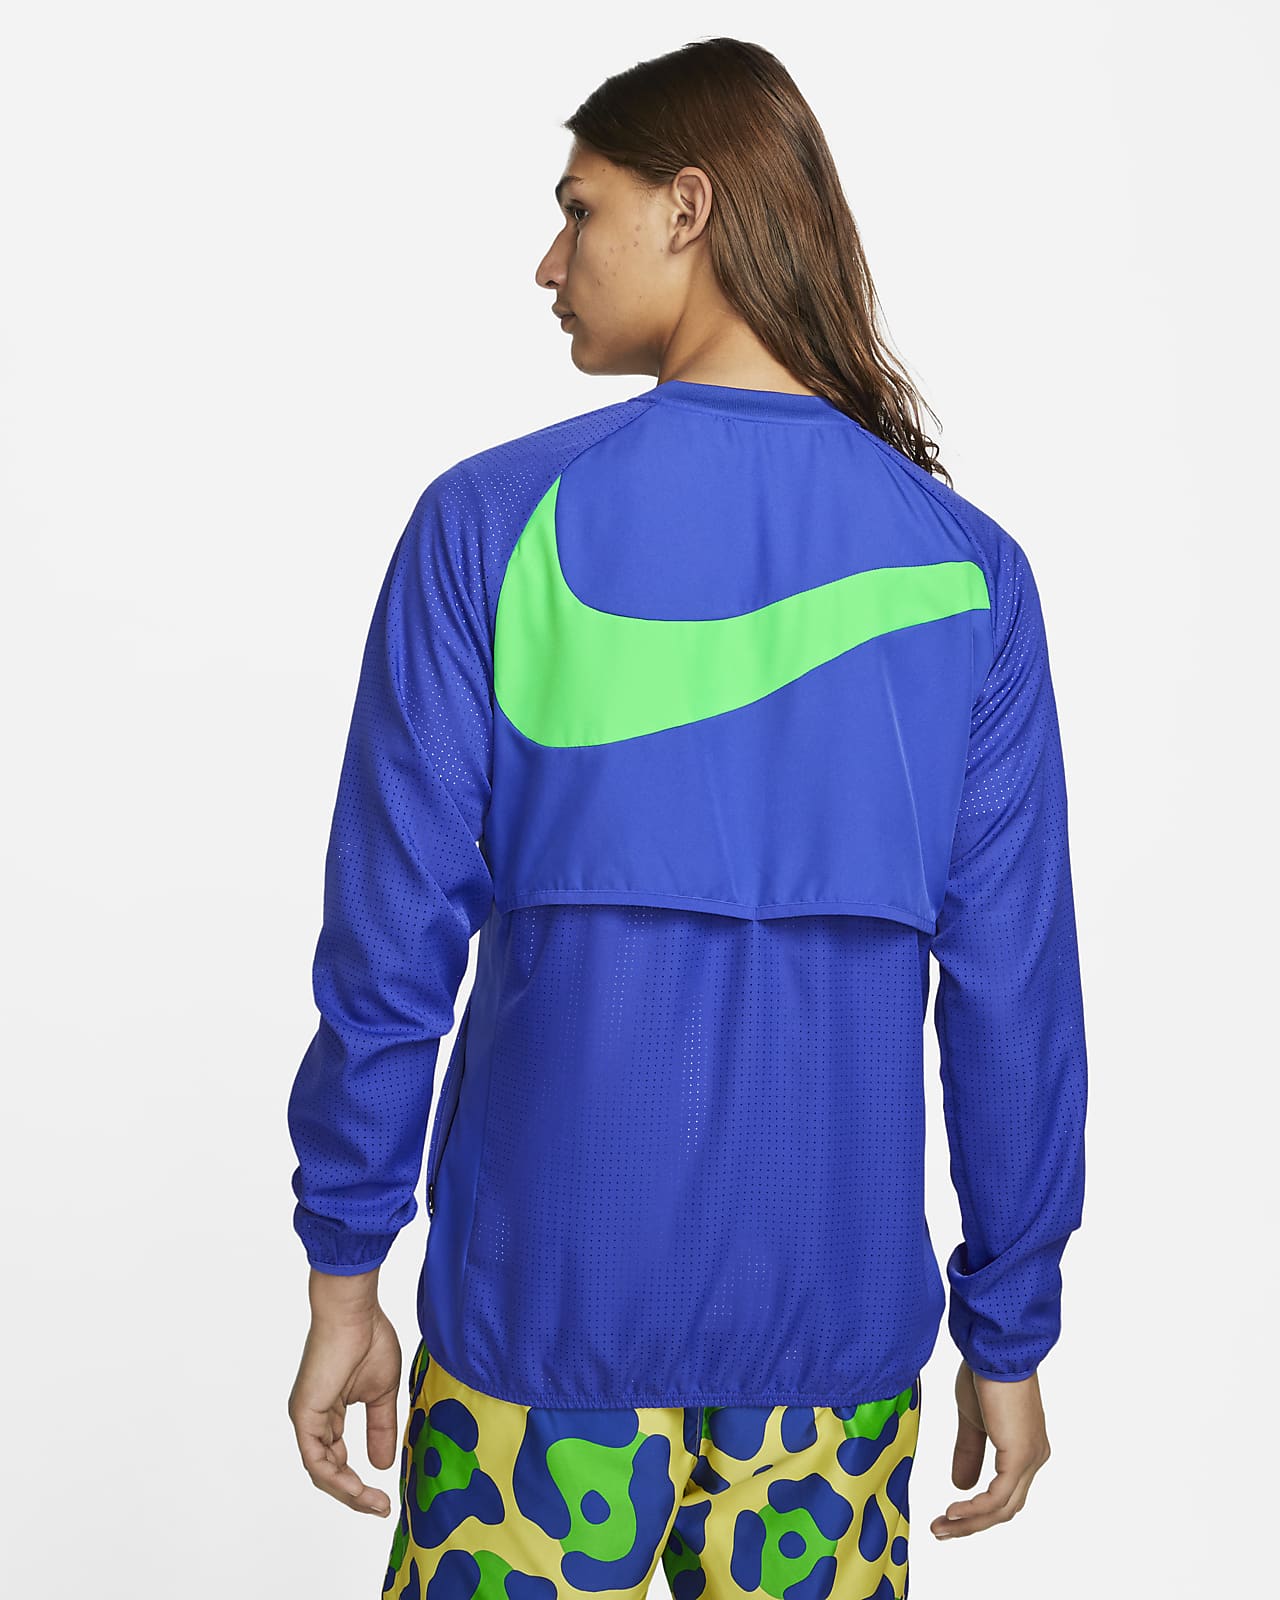 Brasil Academy AWF Men's Nike Dri-FIT Woven Soccer Jacket.